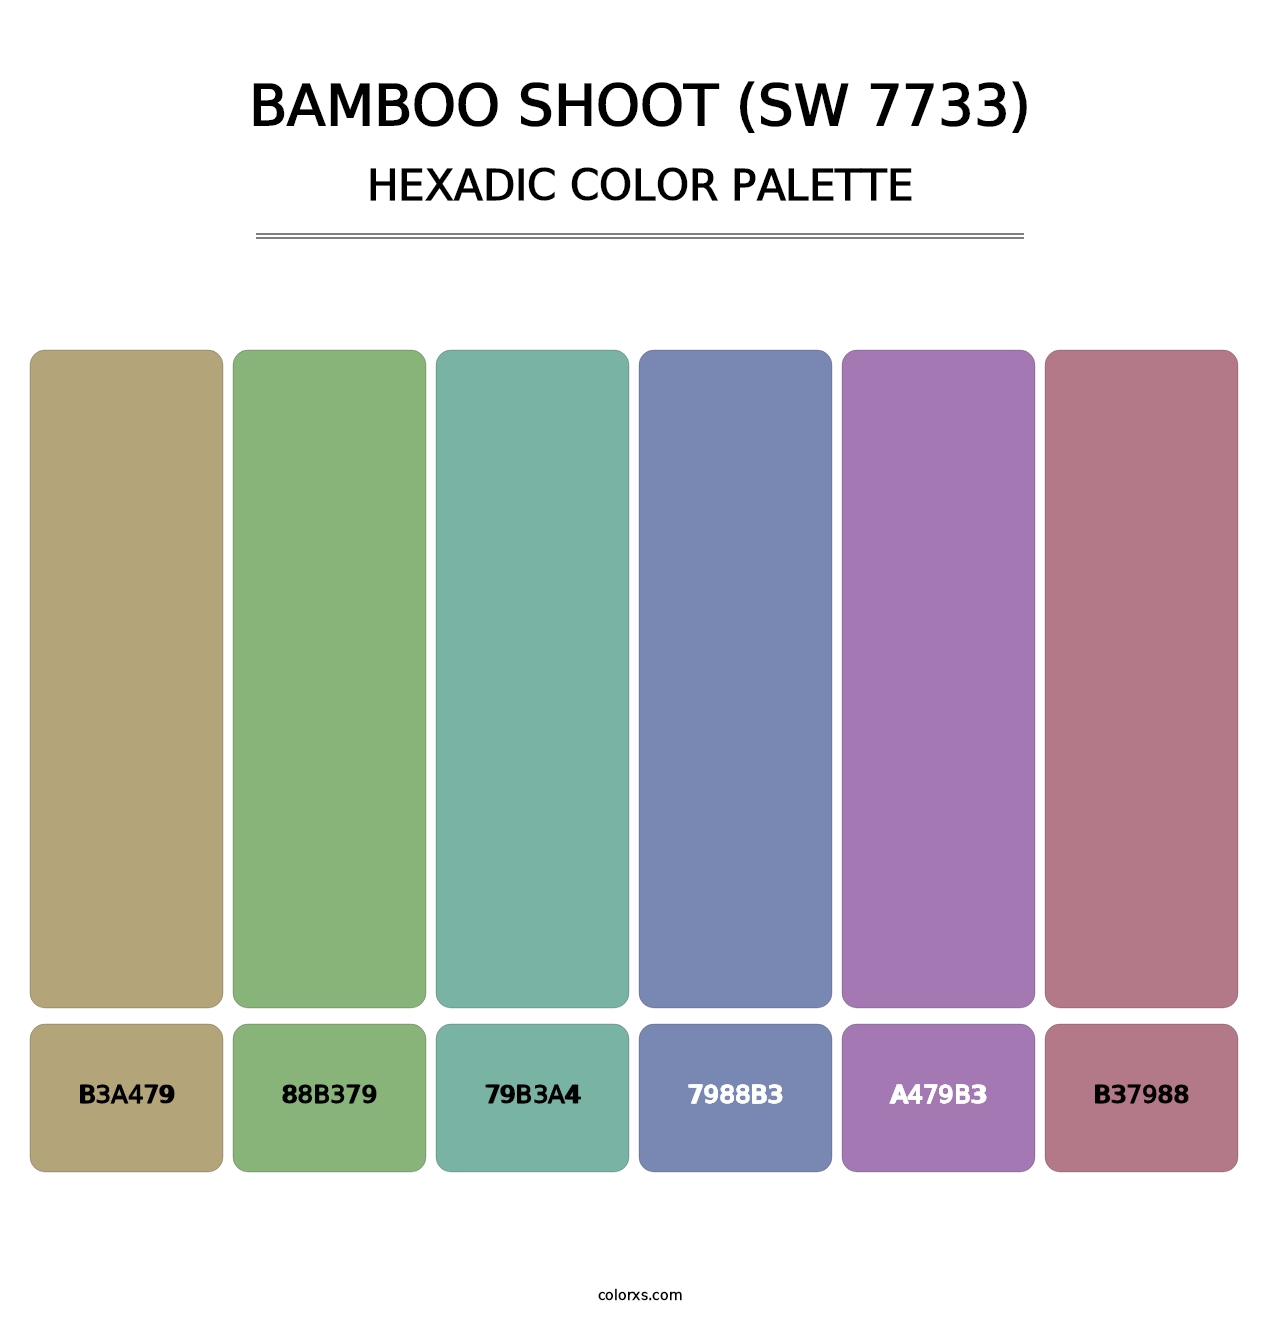 Bamboo Shoot (SW 7733) - Hexadic Color Palette